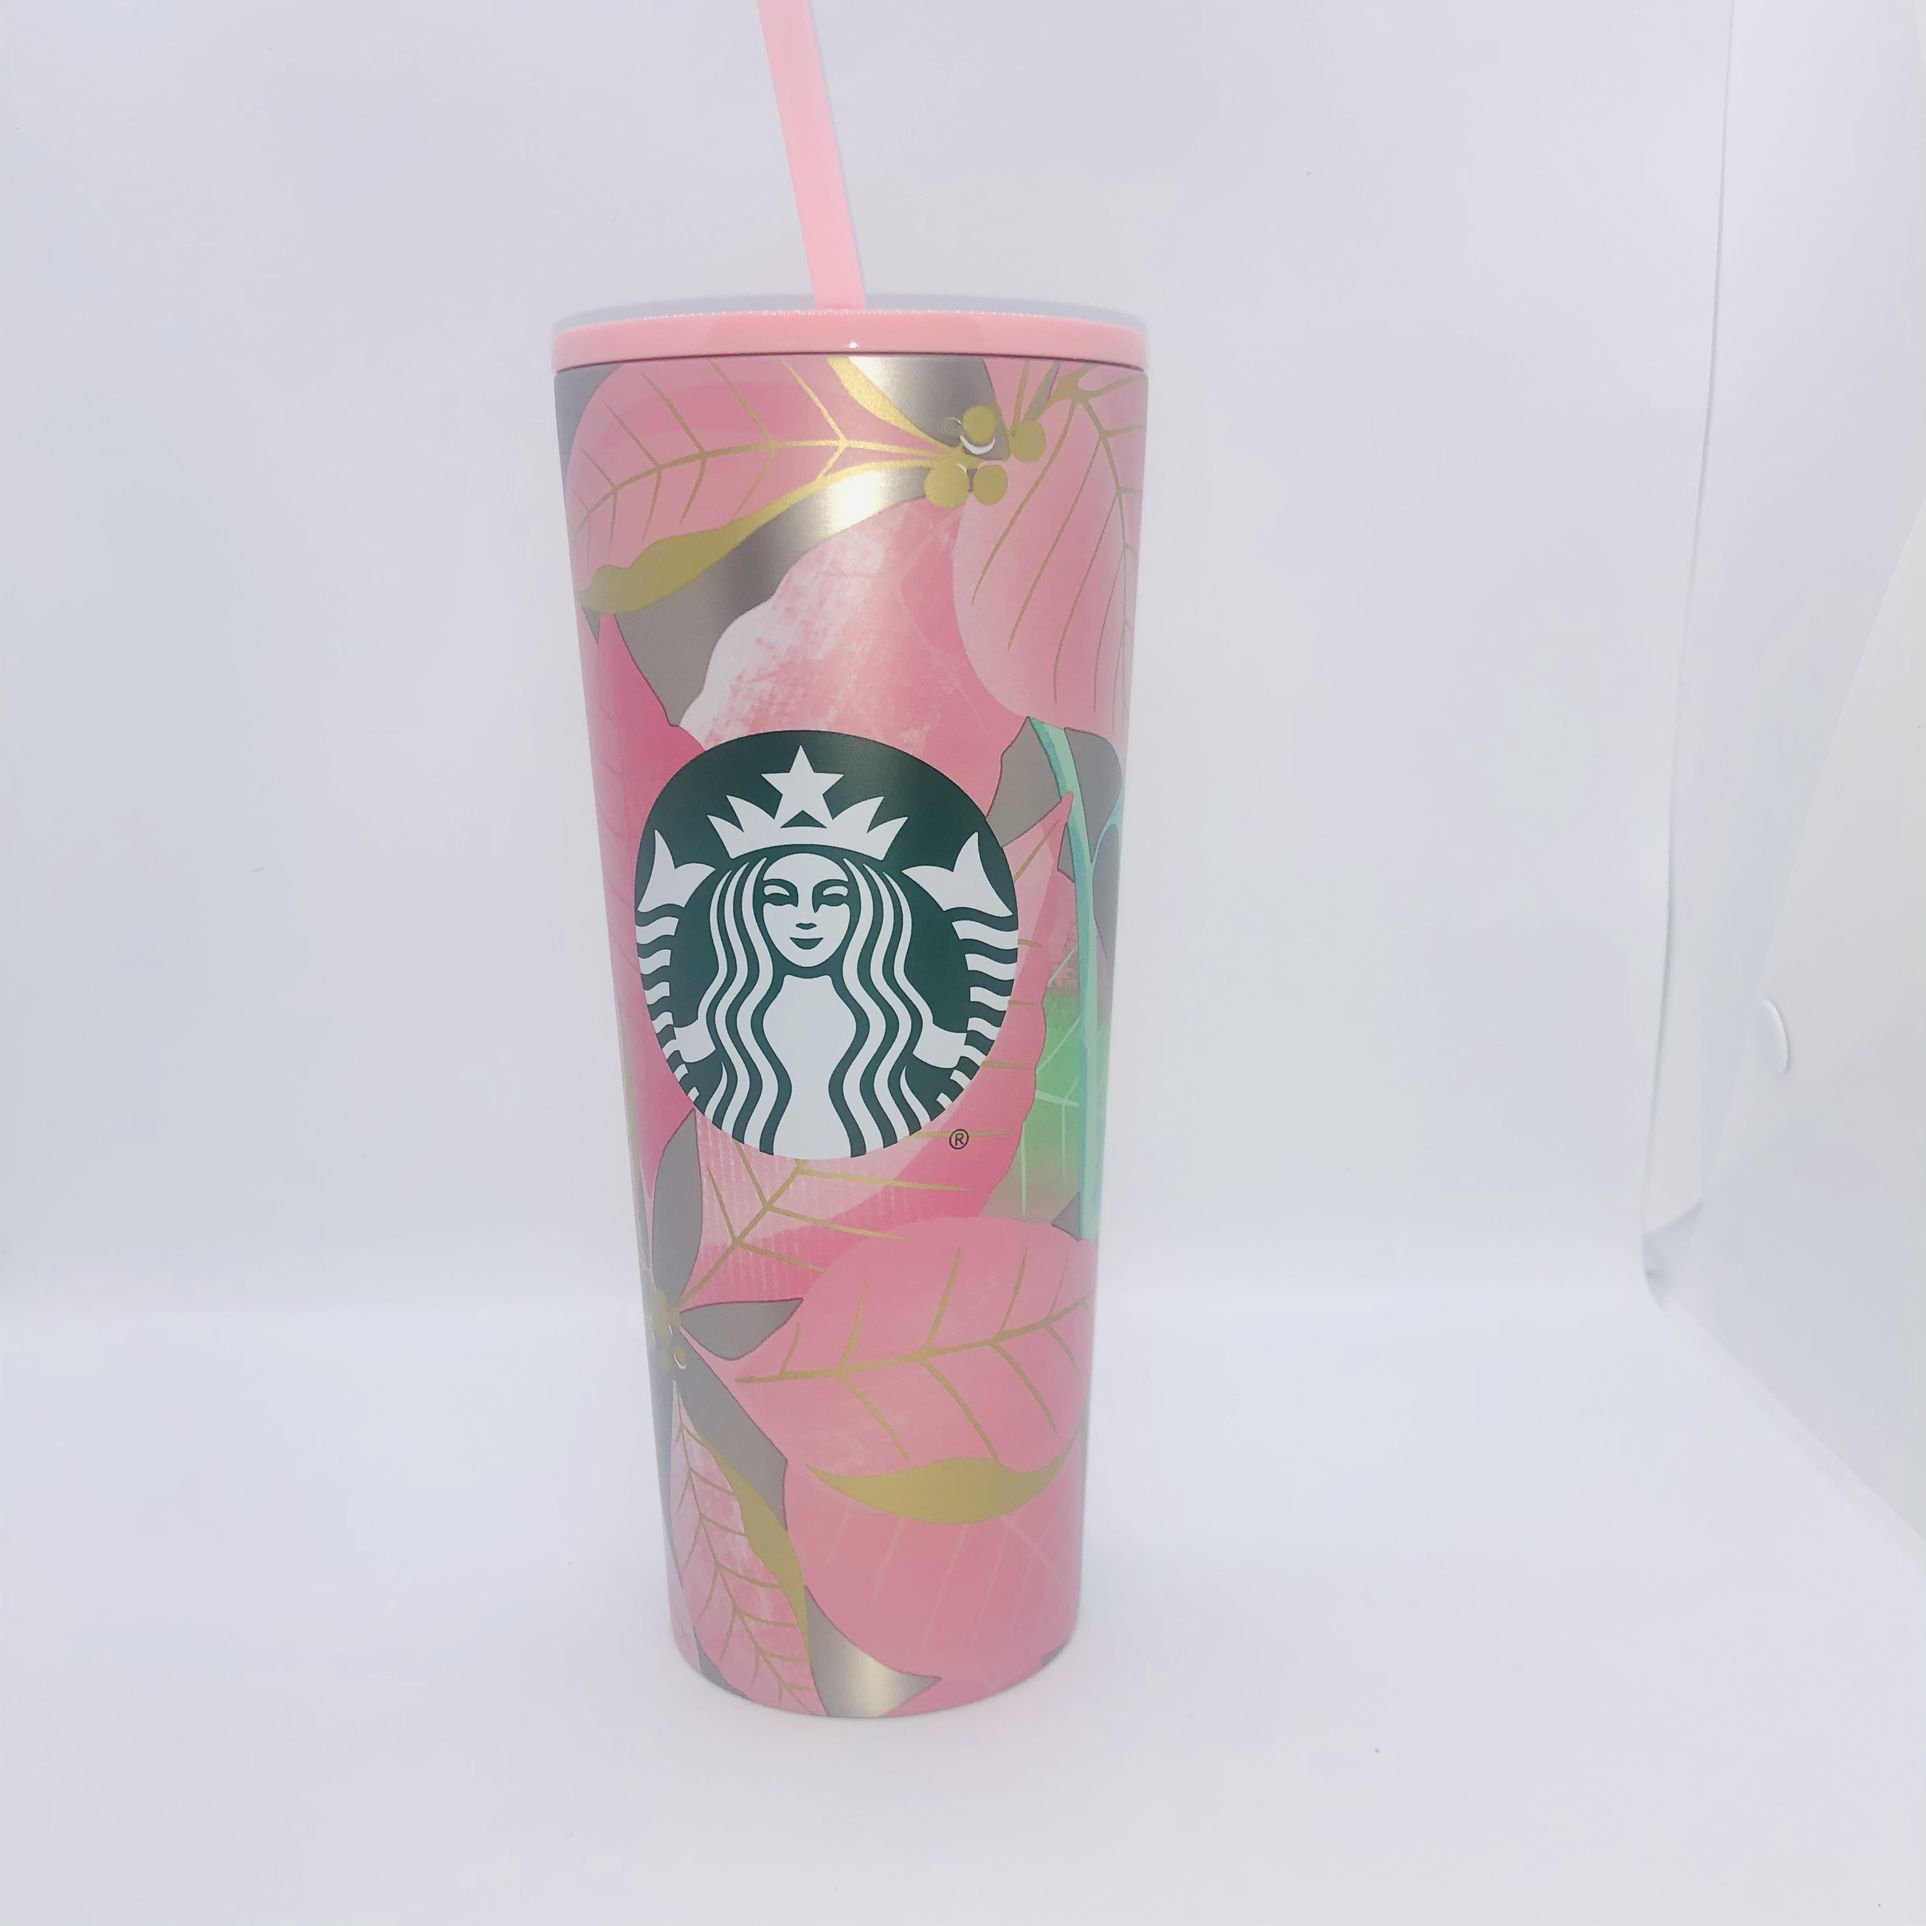 Starbucks Pink Poinsettia Tumbler Holiday 2020 Metal New